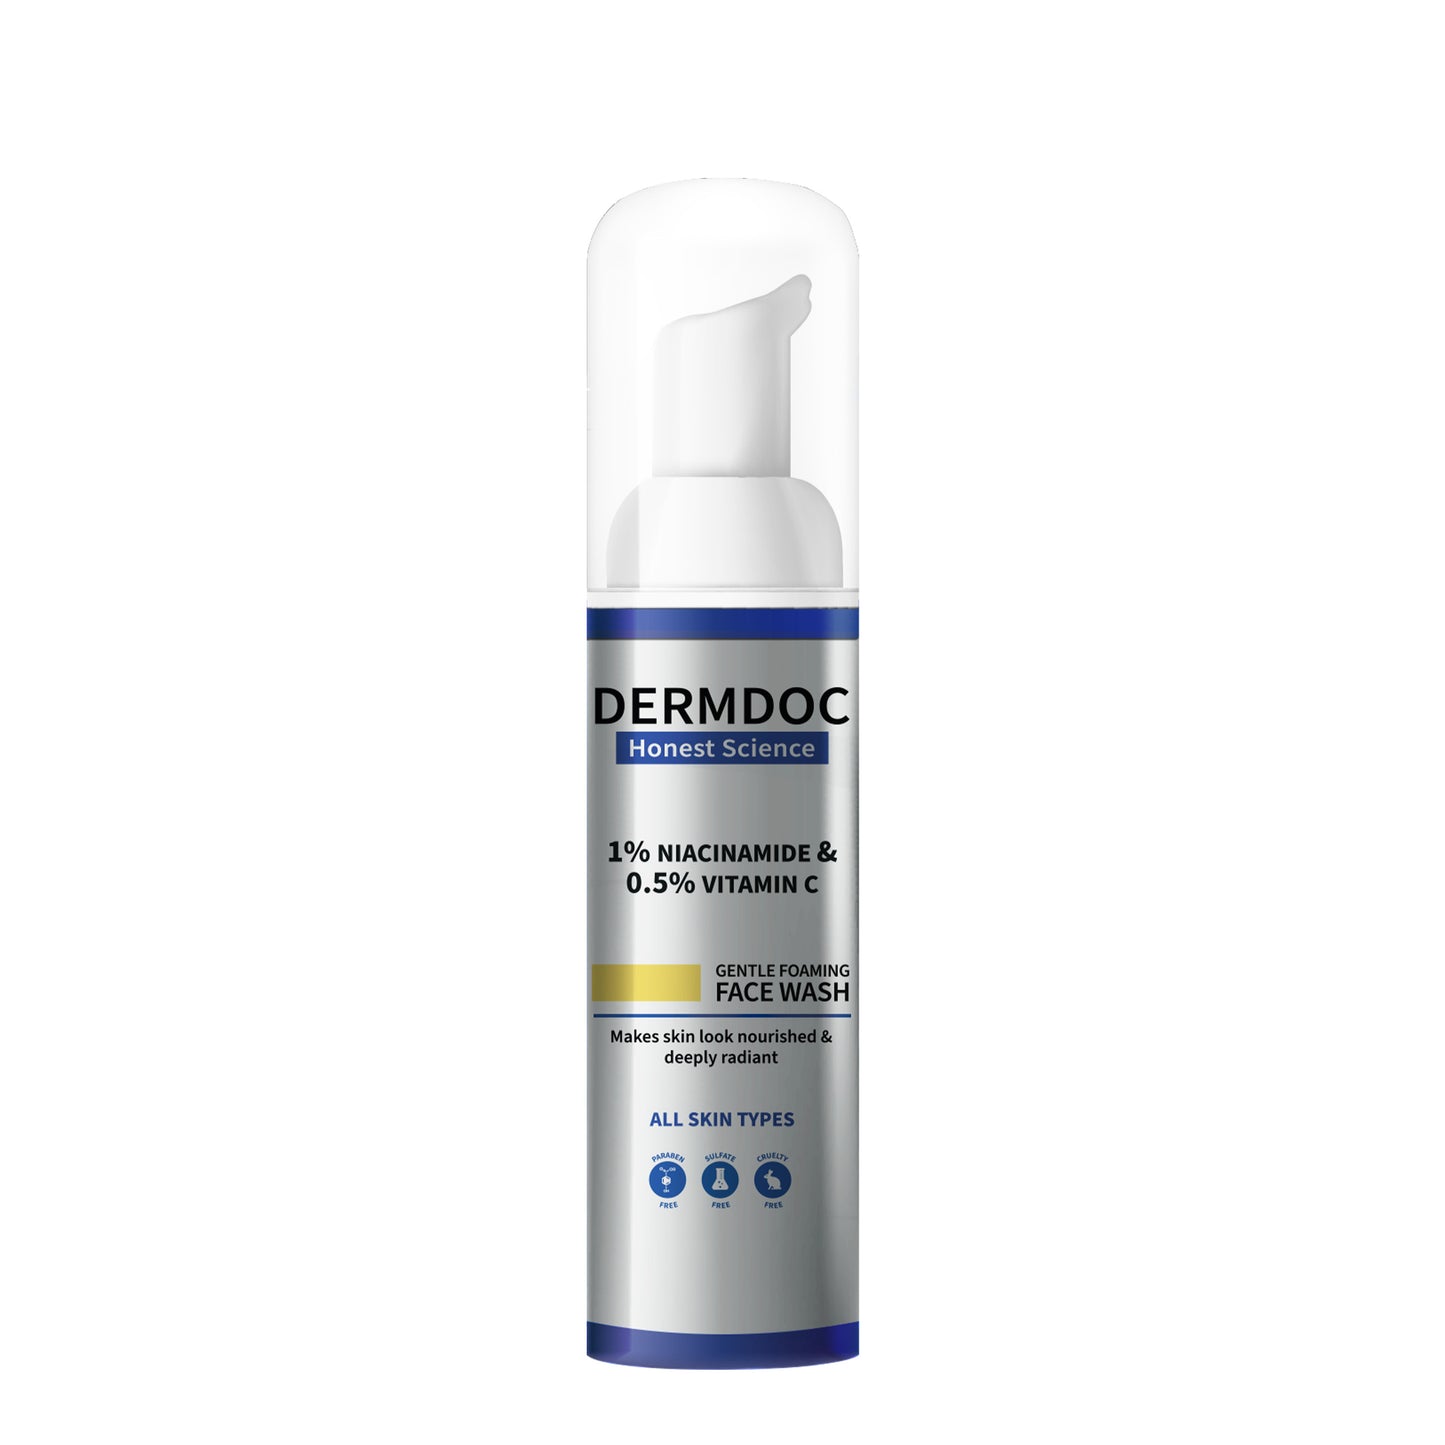 DERMDOC 1% Niacinamide & 0.5% Vitamin C Gentle Foaming Face Wash (80 ml)